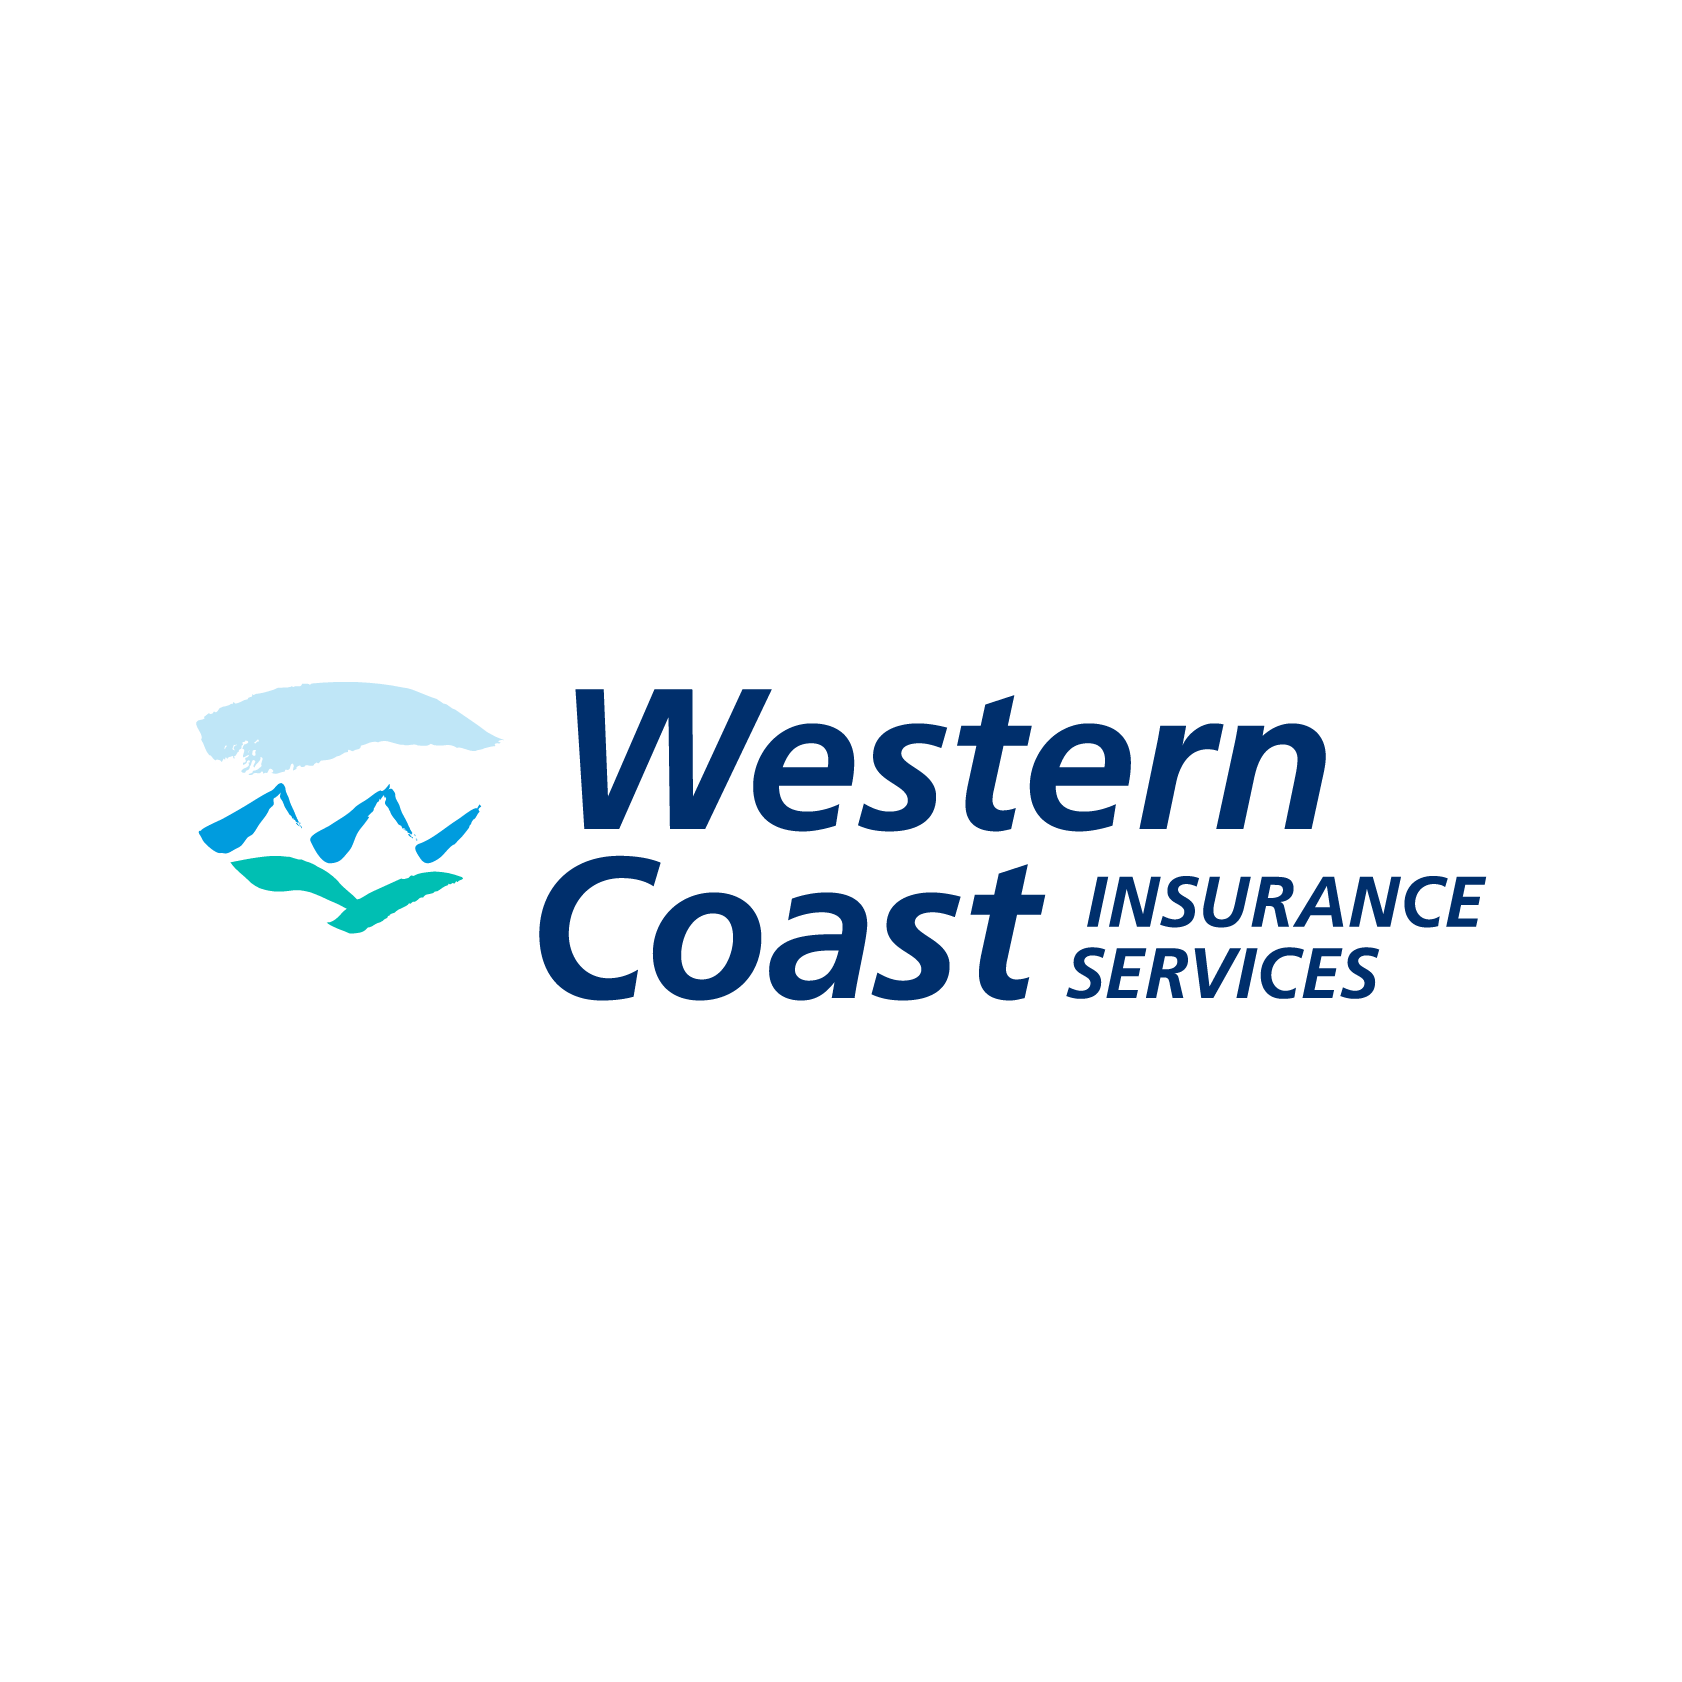 Western Coast Insurance Services Ltd.